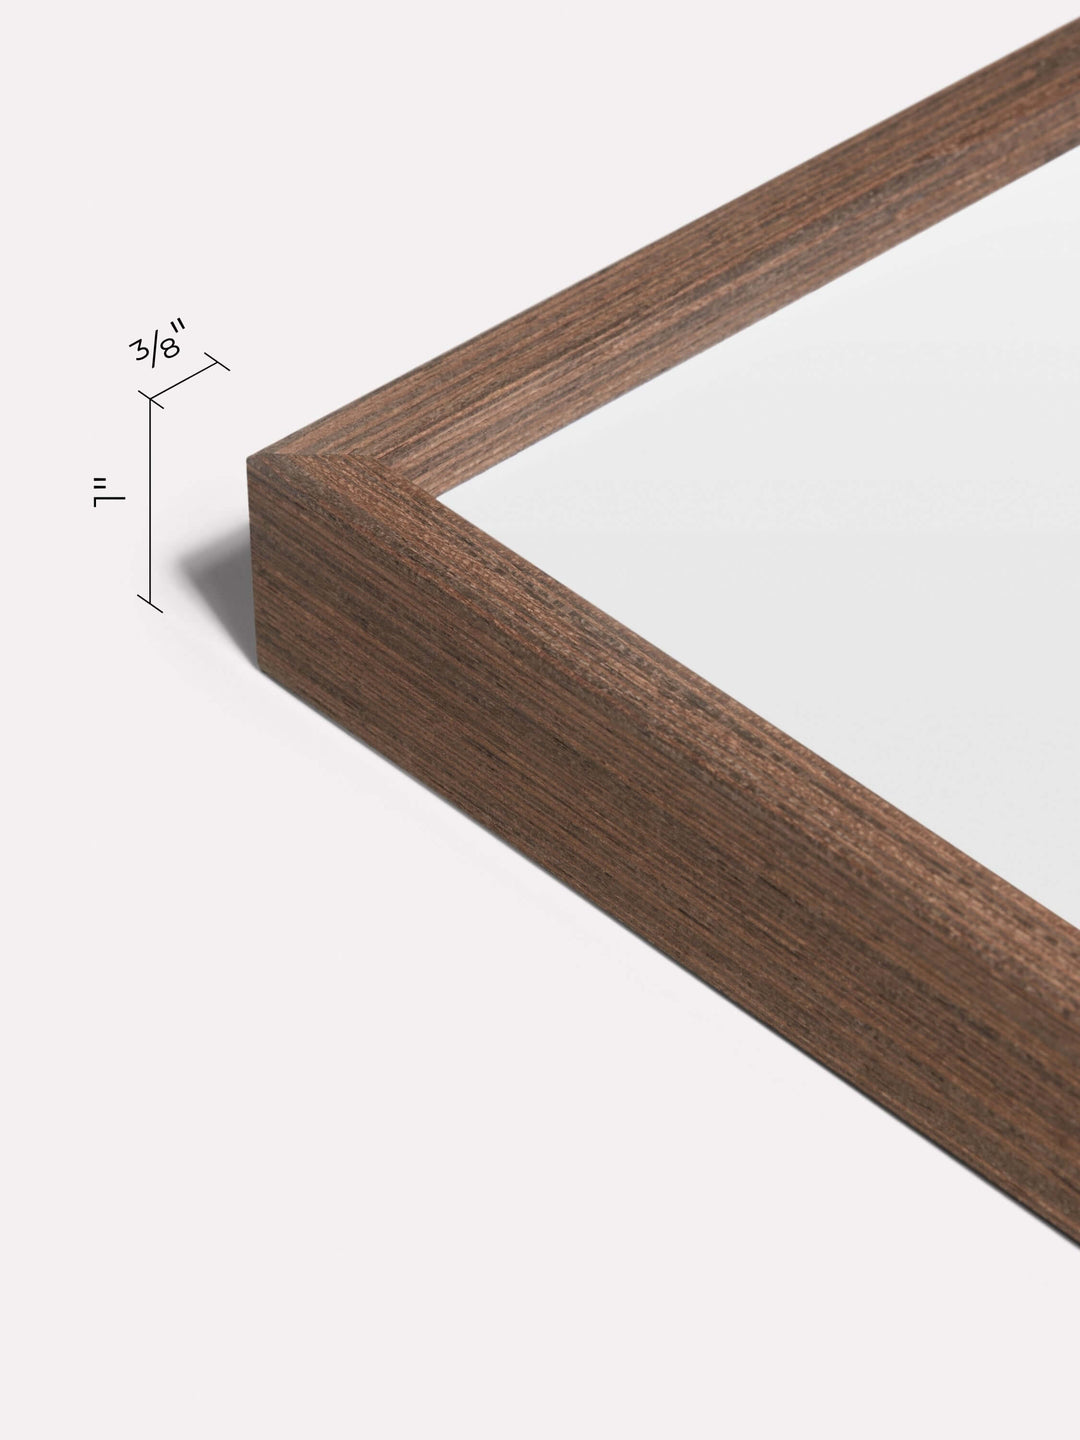 9x12-inch Thin Frame, Walnut - Close-up view